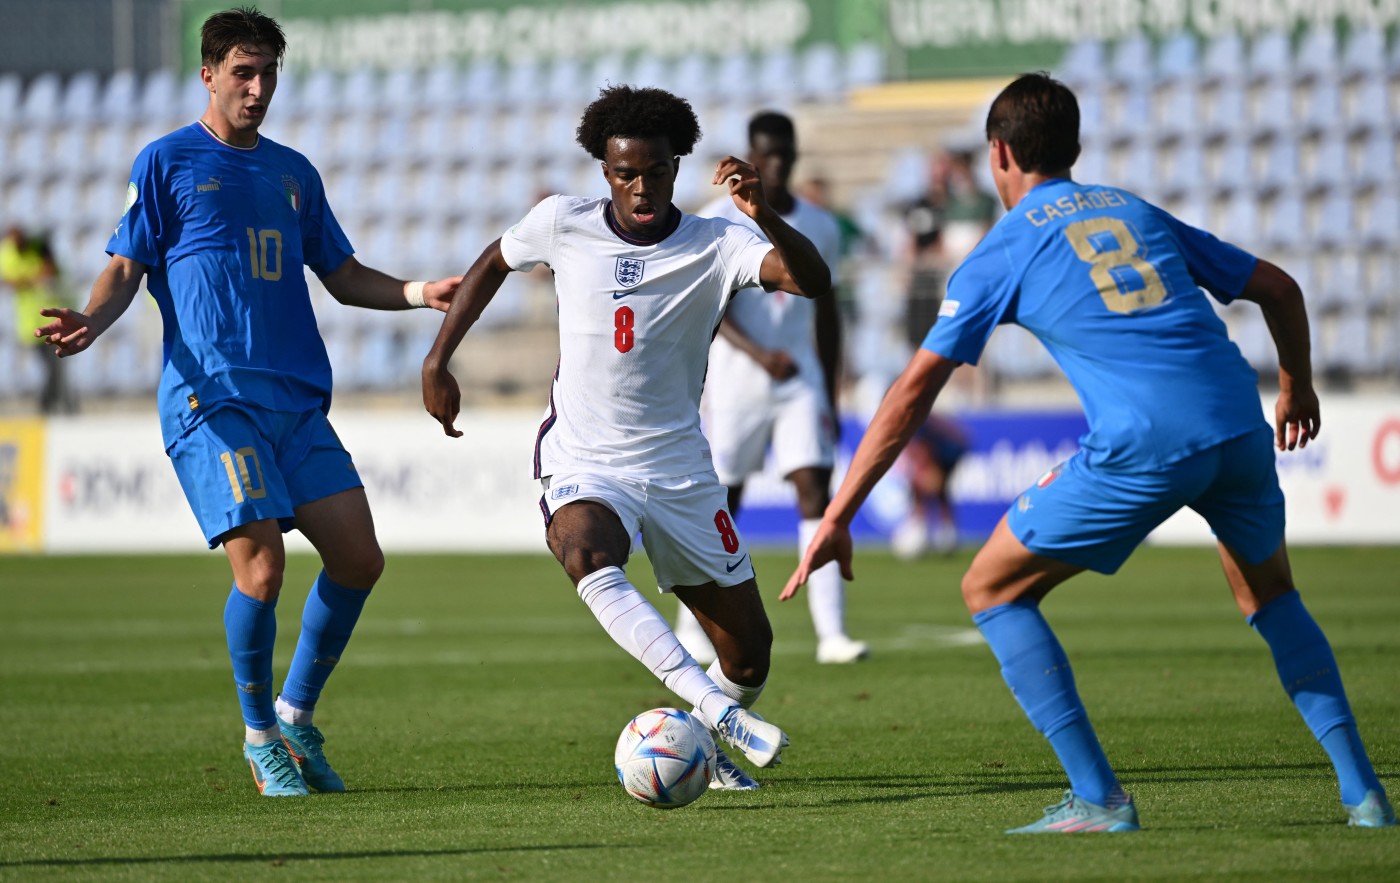 editorial/news/2022/08/19/Casadei-Chukwuemeka-U19-Euros